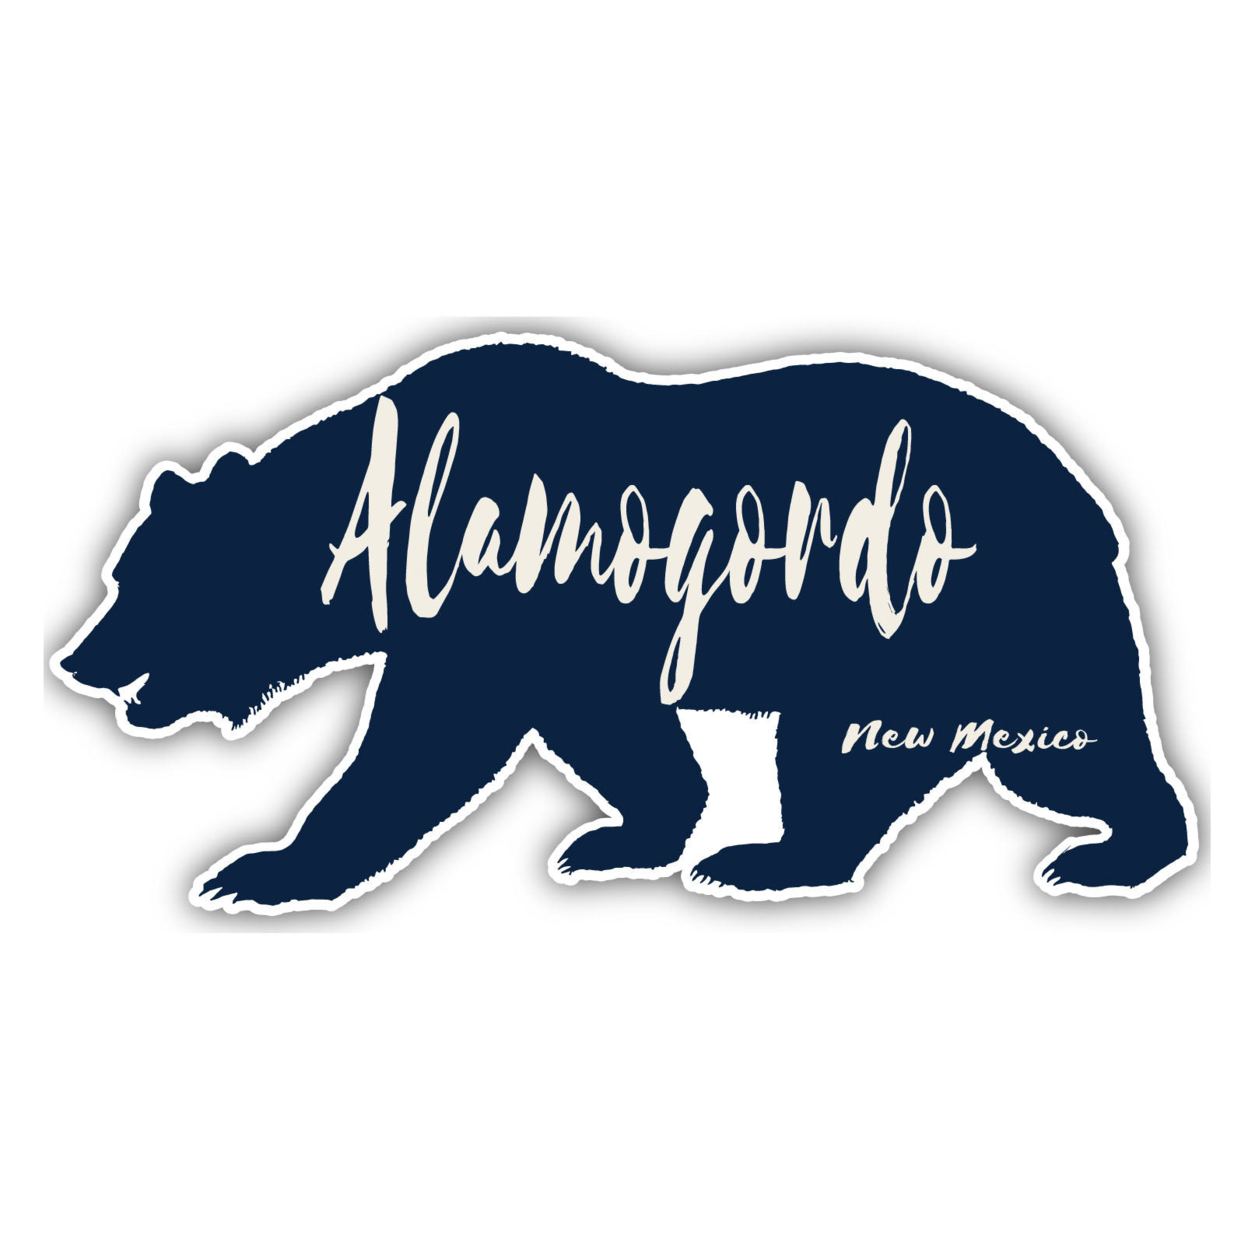 Alamogordo New Mexico Souvenir Decorative Stickers (Choose Theme And Size) - Single Unit, 4-Inch, Bear